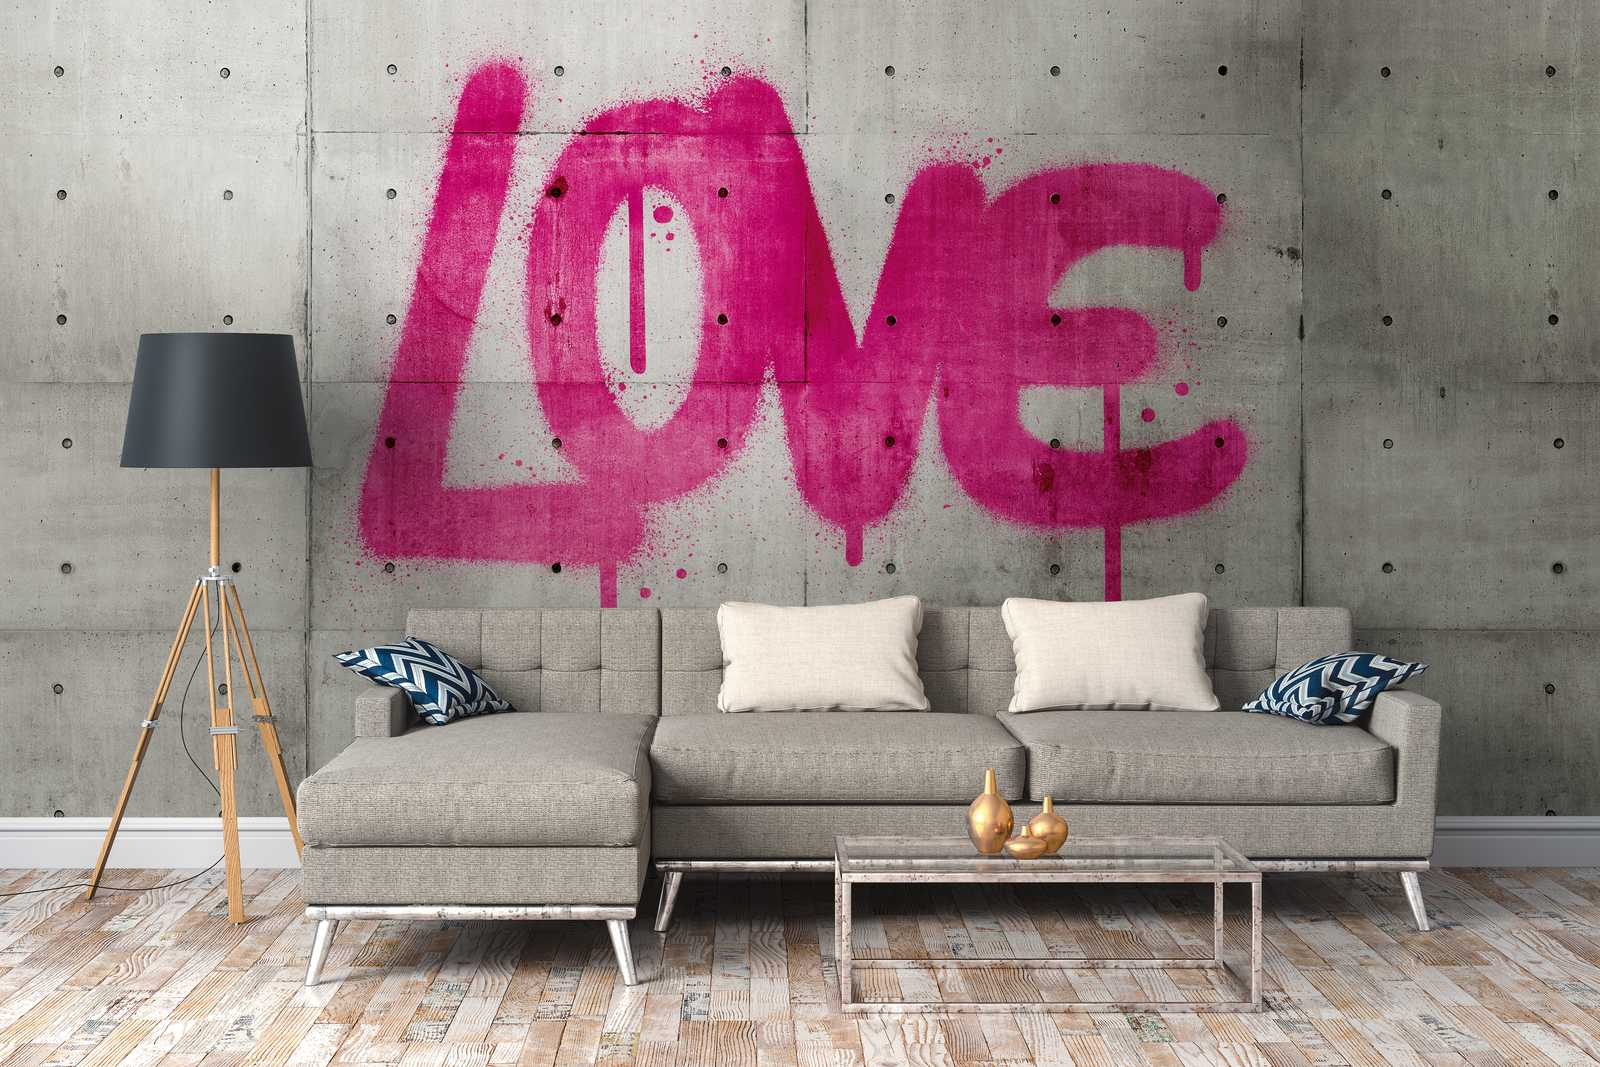             Behang noviteit - beton motief behang LOVE graffiti, grijs & roze
        